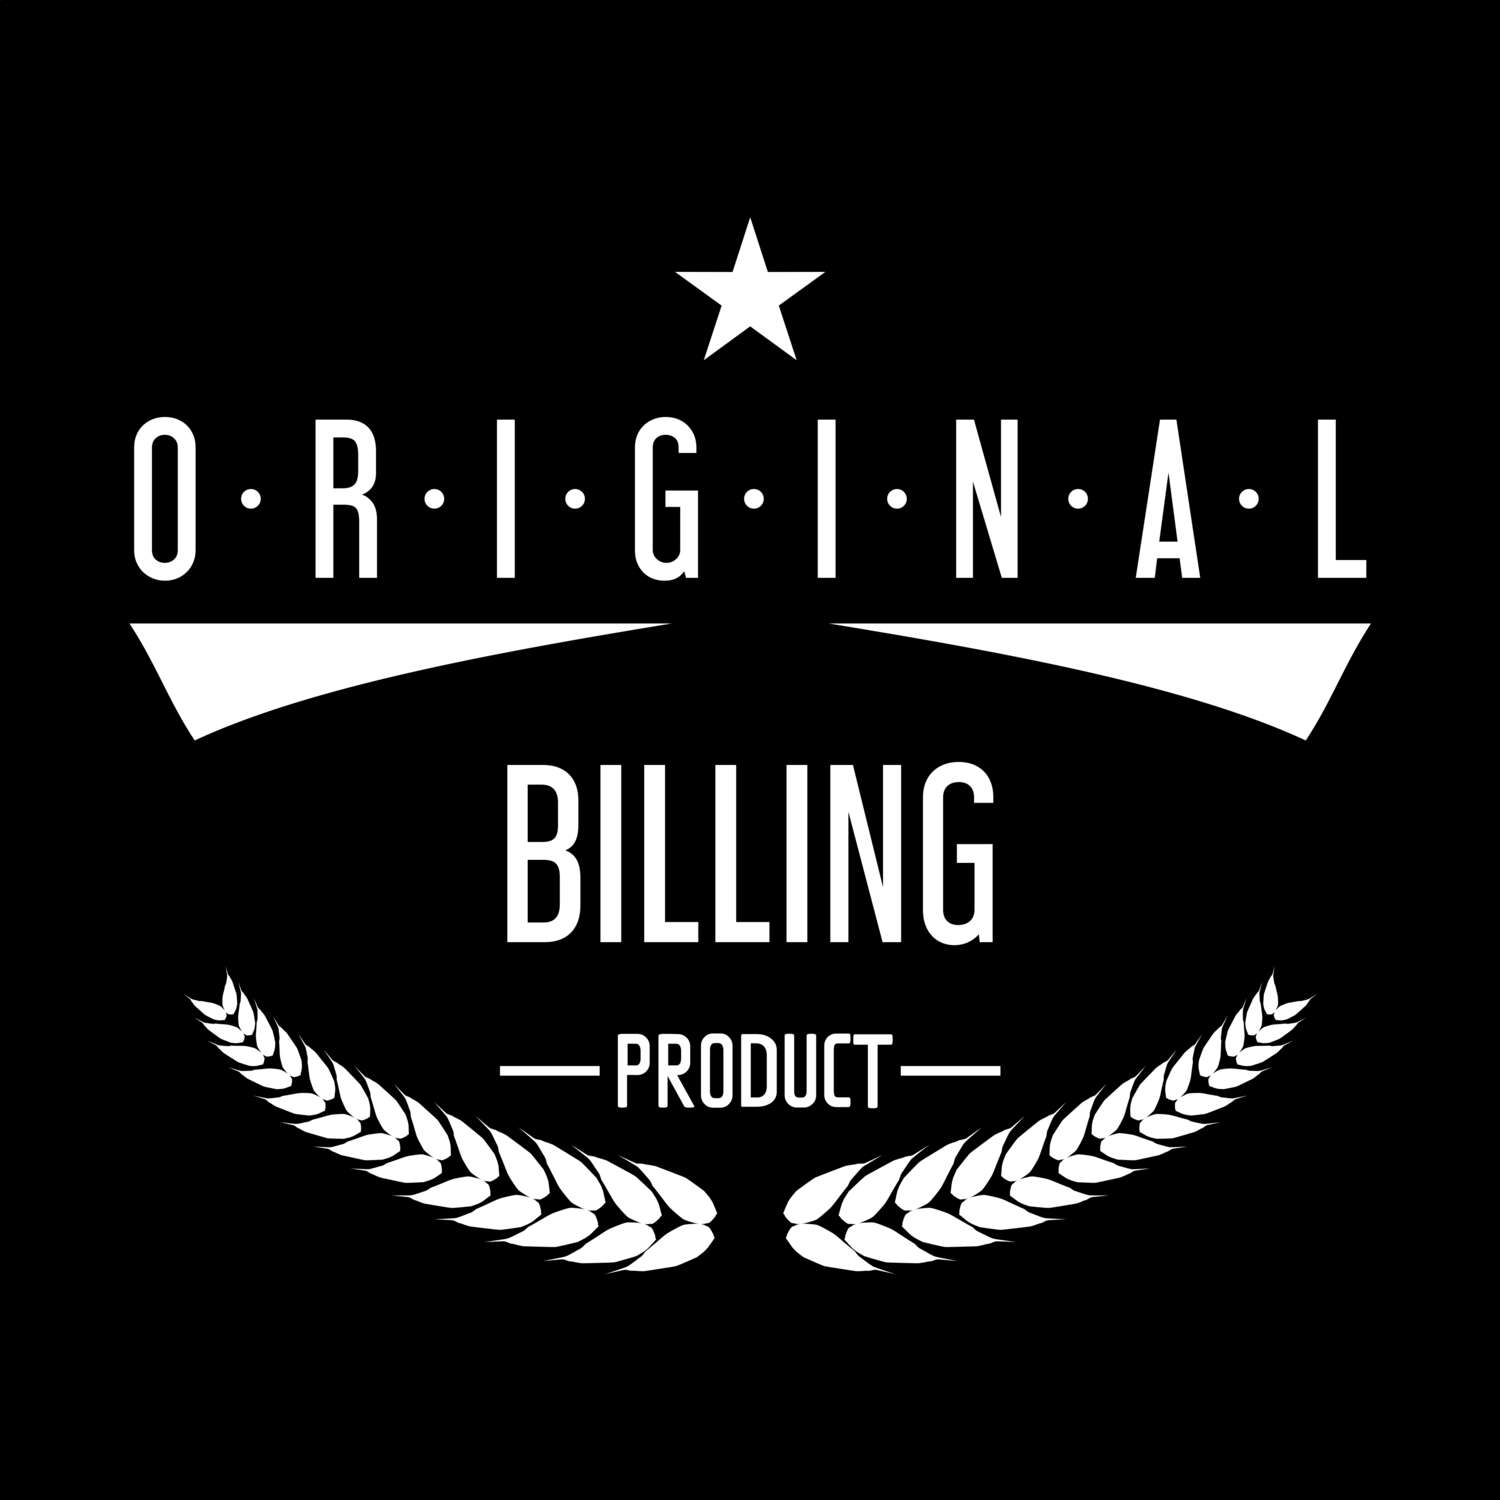 Billing T-Shirt »Original Product«